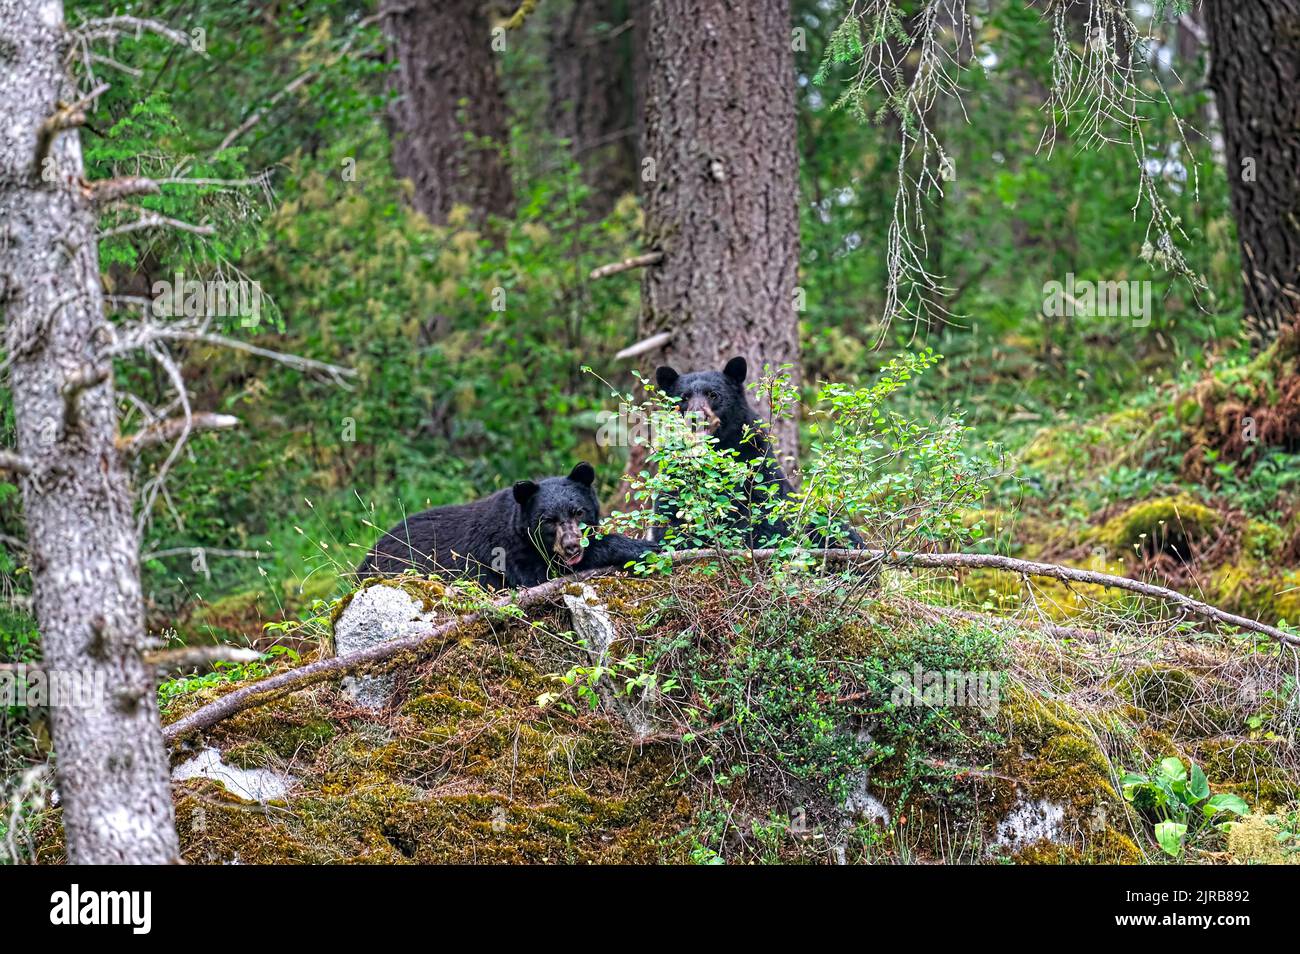 Two young American black bears (Ursus americanus) feasting on huckleberries in the woods in Minnekhada Regional Park, B. C., Canada. Stock Photo